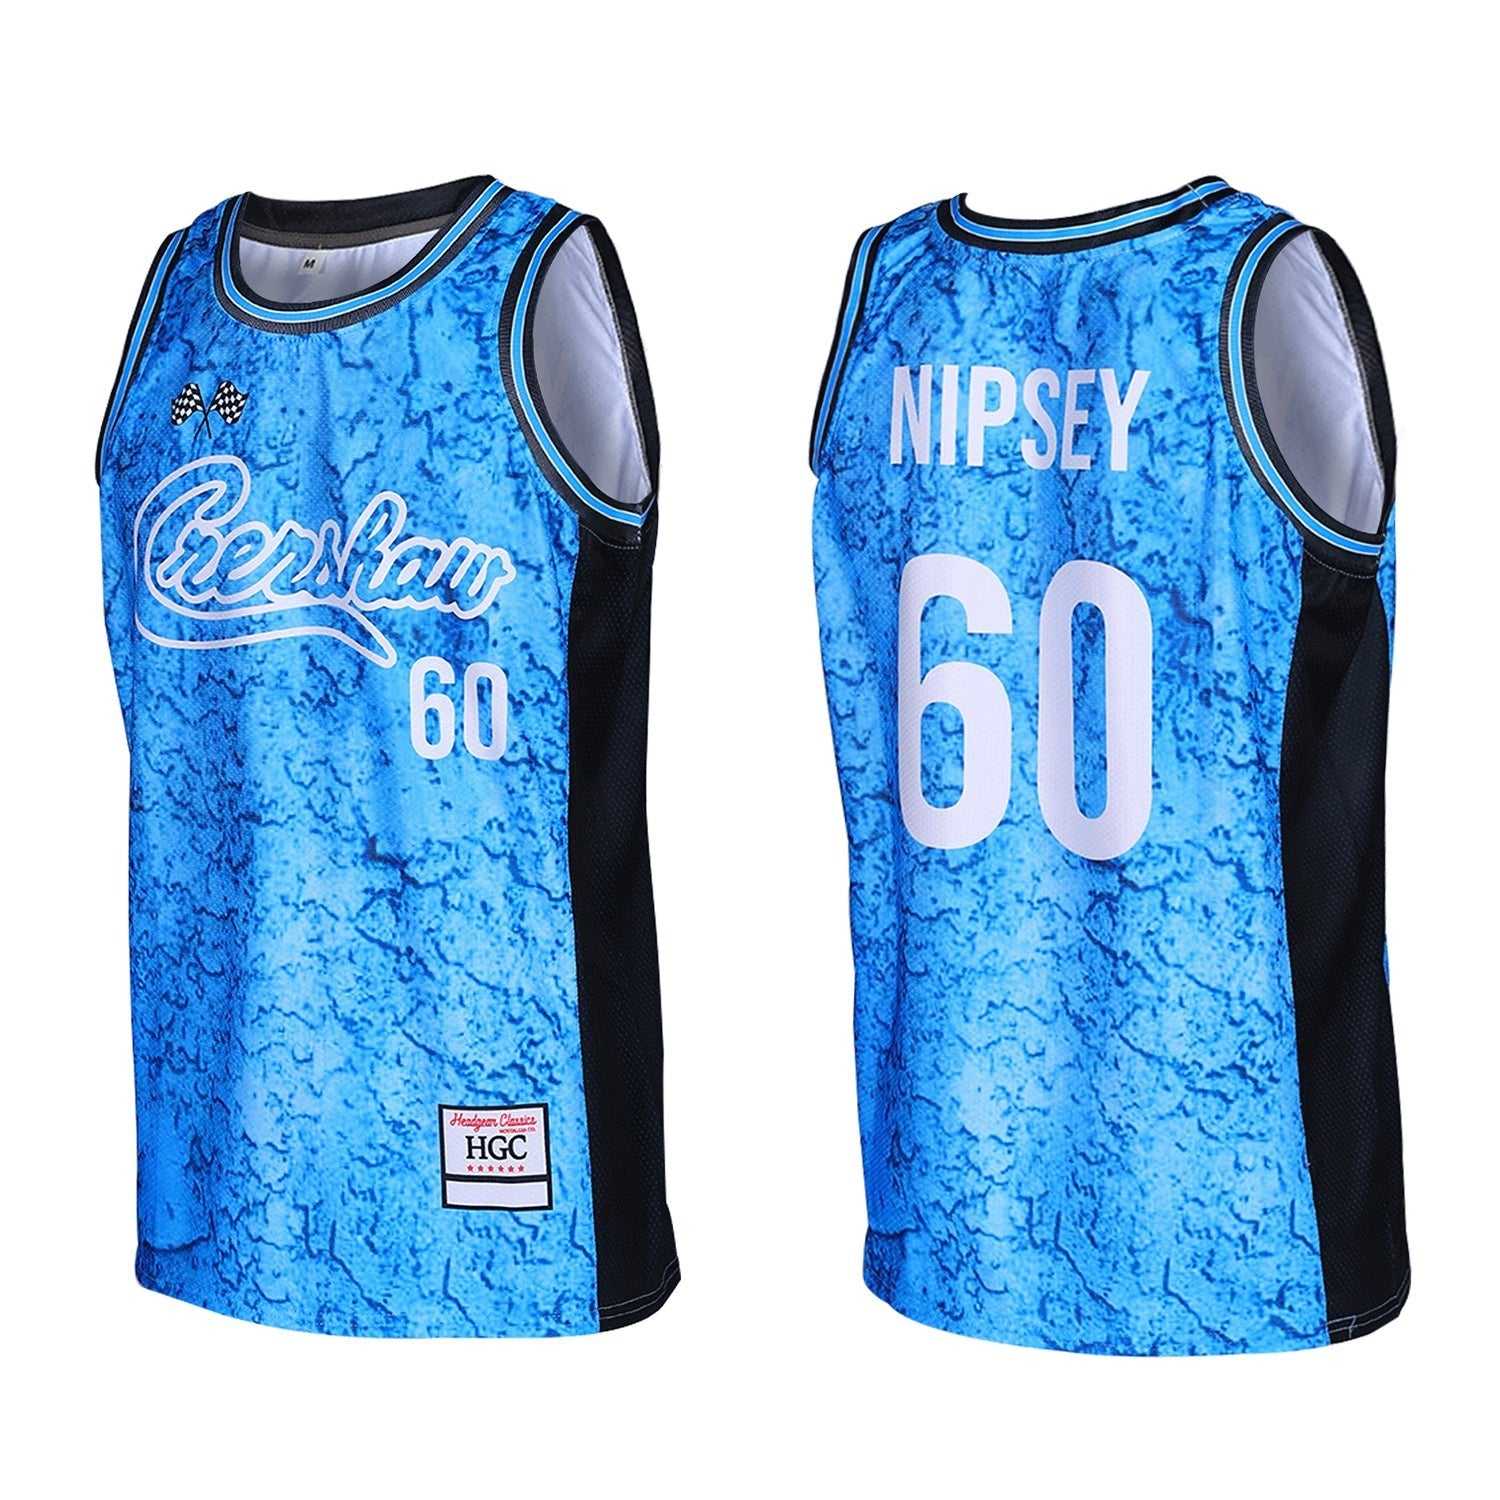 Nipsey Hussle - Rolling 60's Jersey